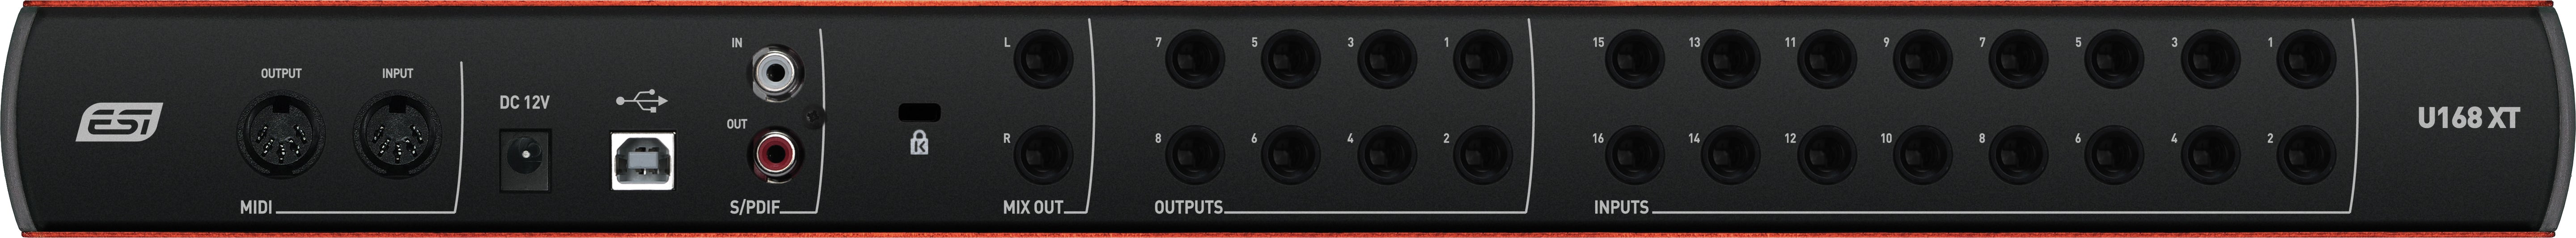 ESI Audio U168 XT - Professional 24-bit USB Audio Interface with 16 Inputs / 8 Outputs - Black/Orange